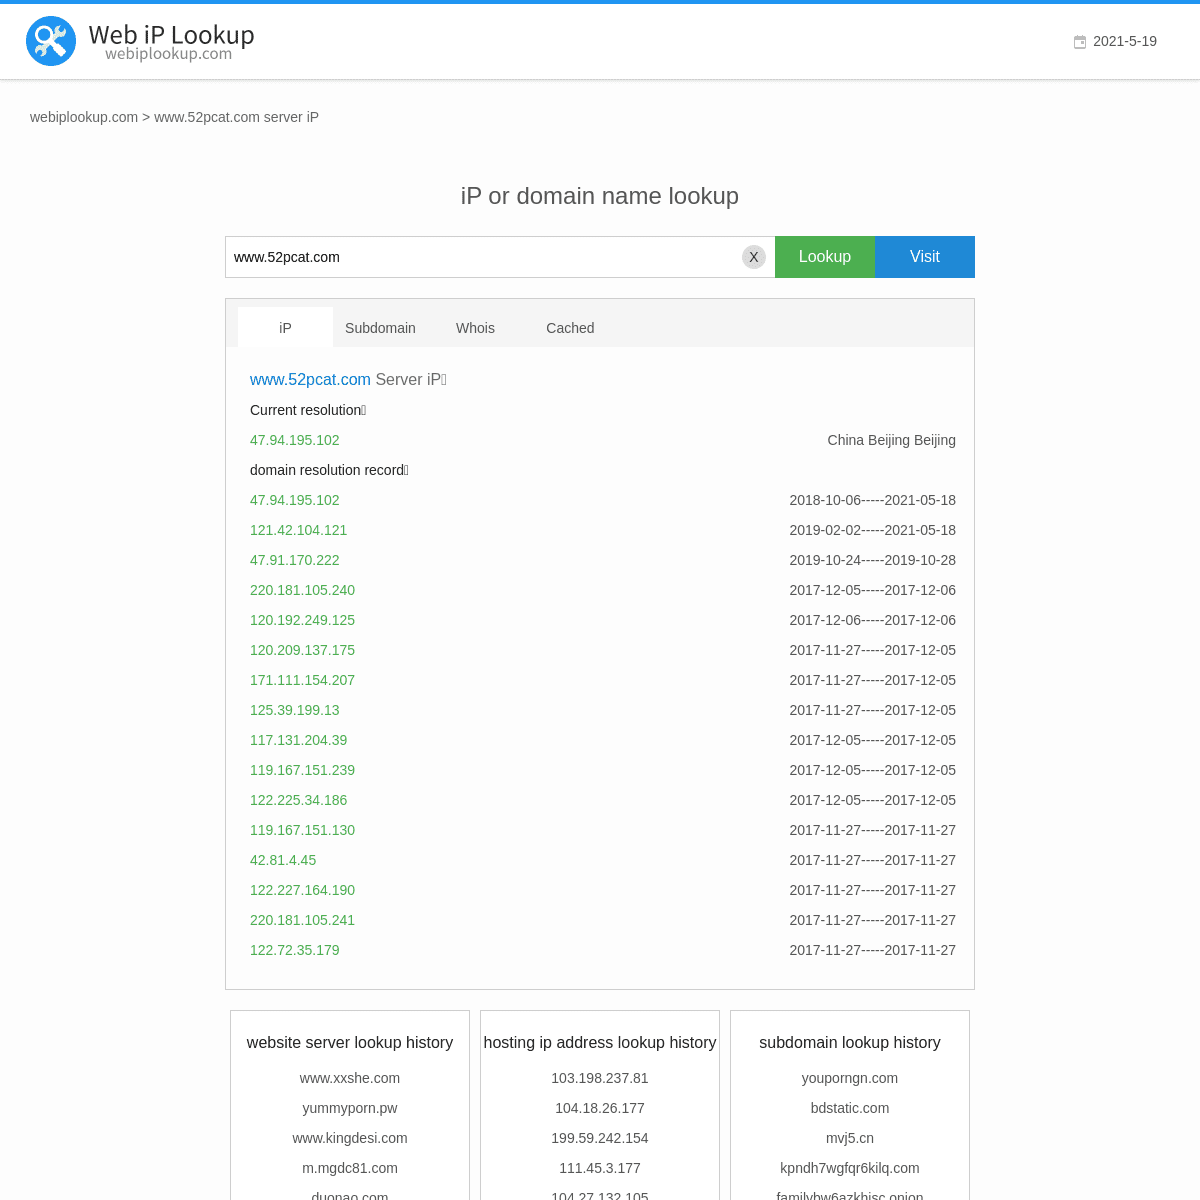 A complete backup of https://webiplookup.com/www.52pcat.com/